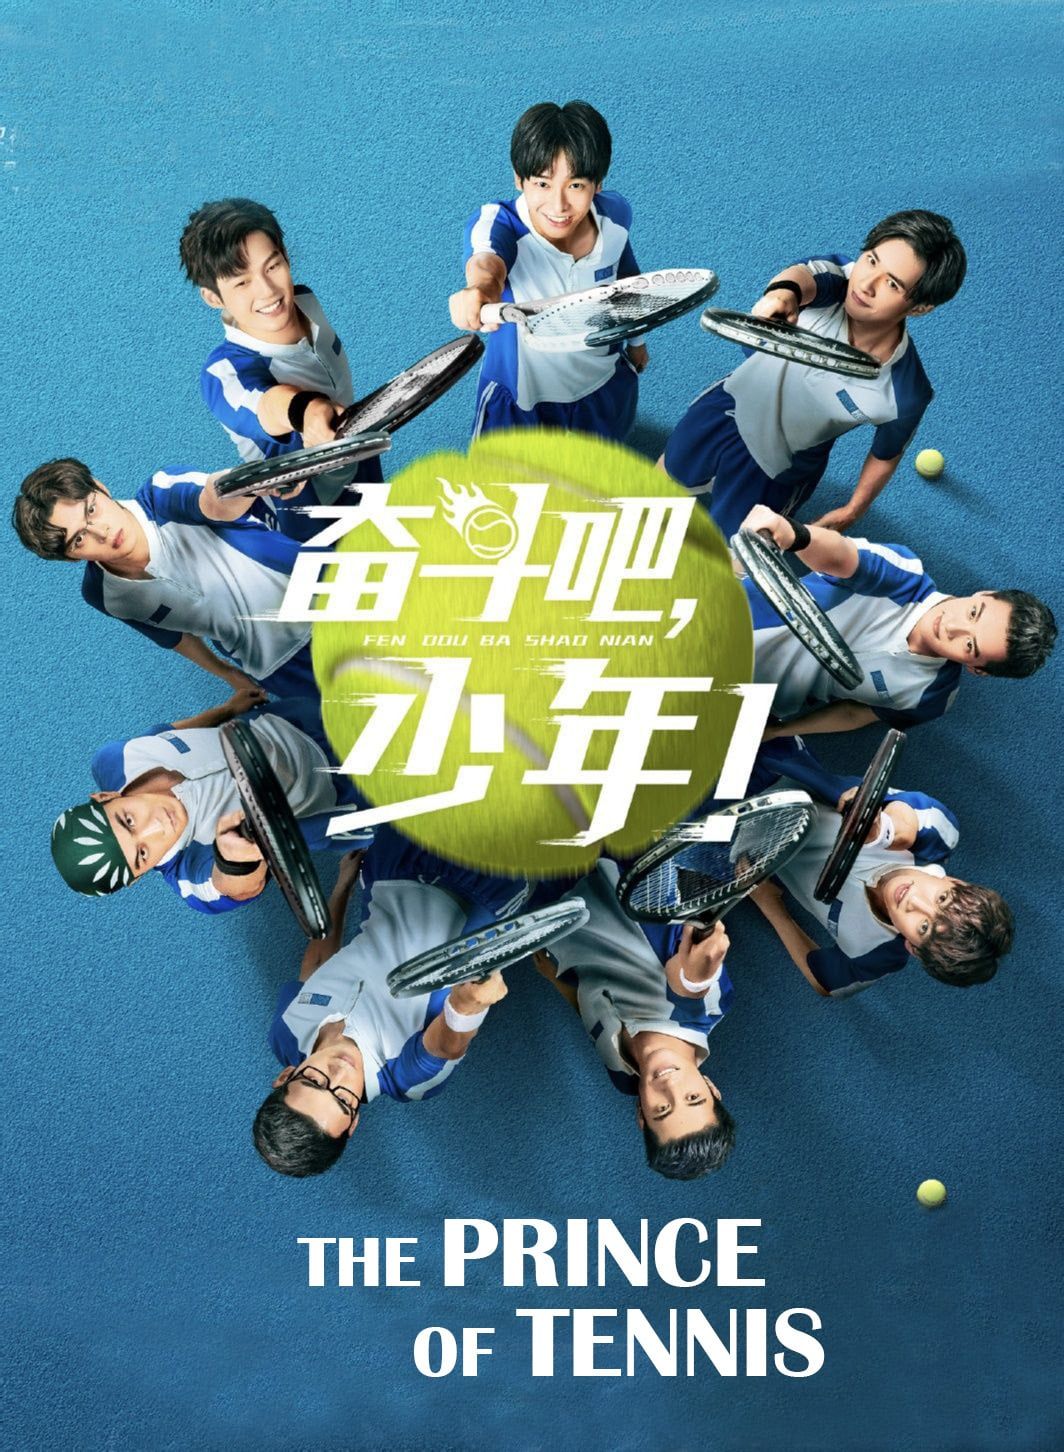 The Prince of Tennis ne zaman